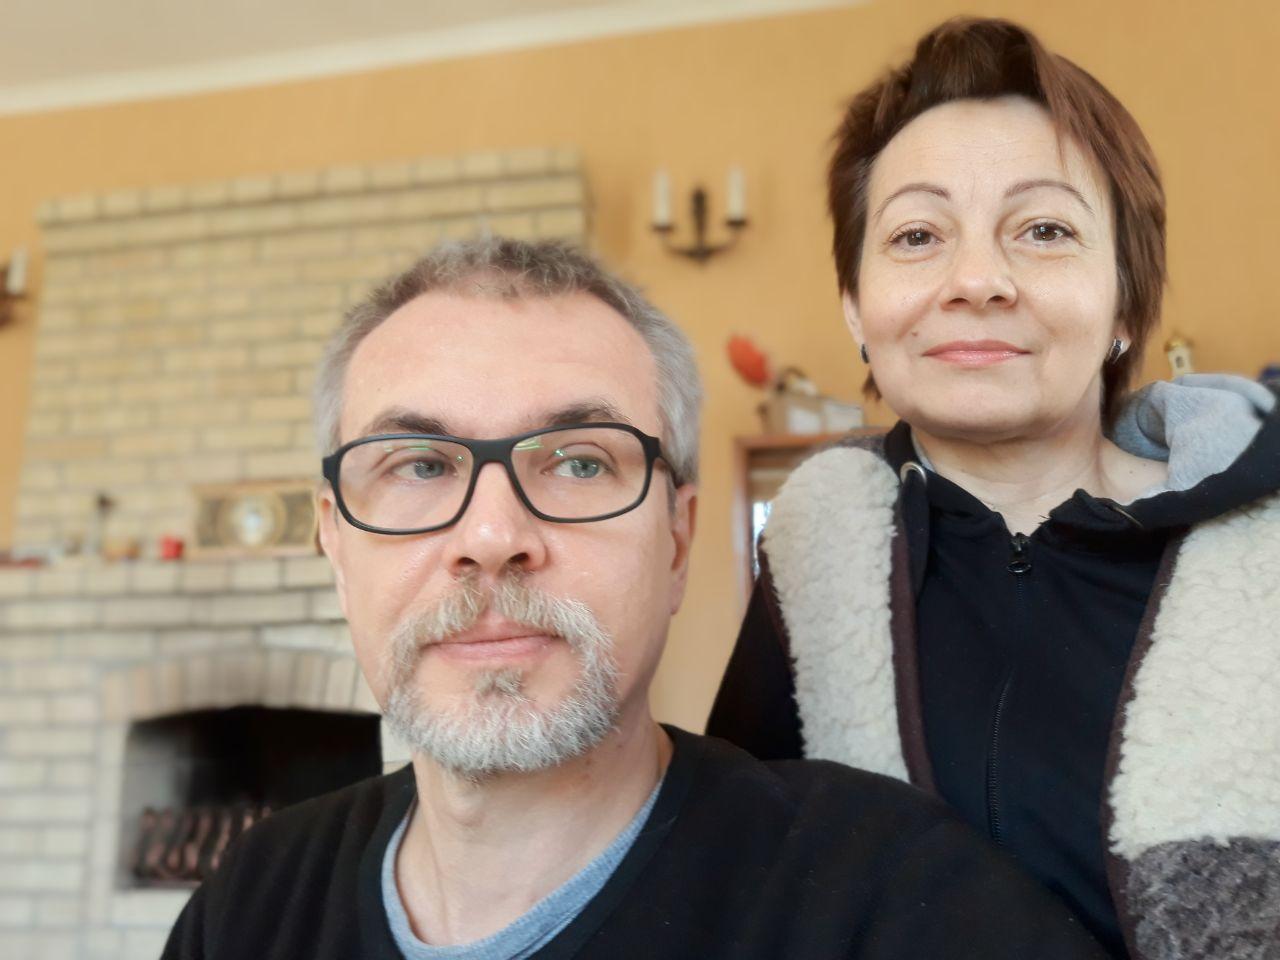 Елена Лазарева и Андрей Кочмурадов, апрель 2020 года. Фото Spektr.Press